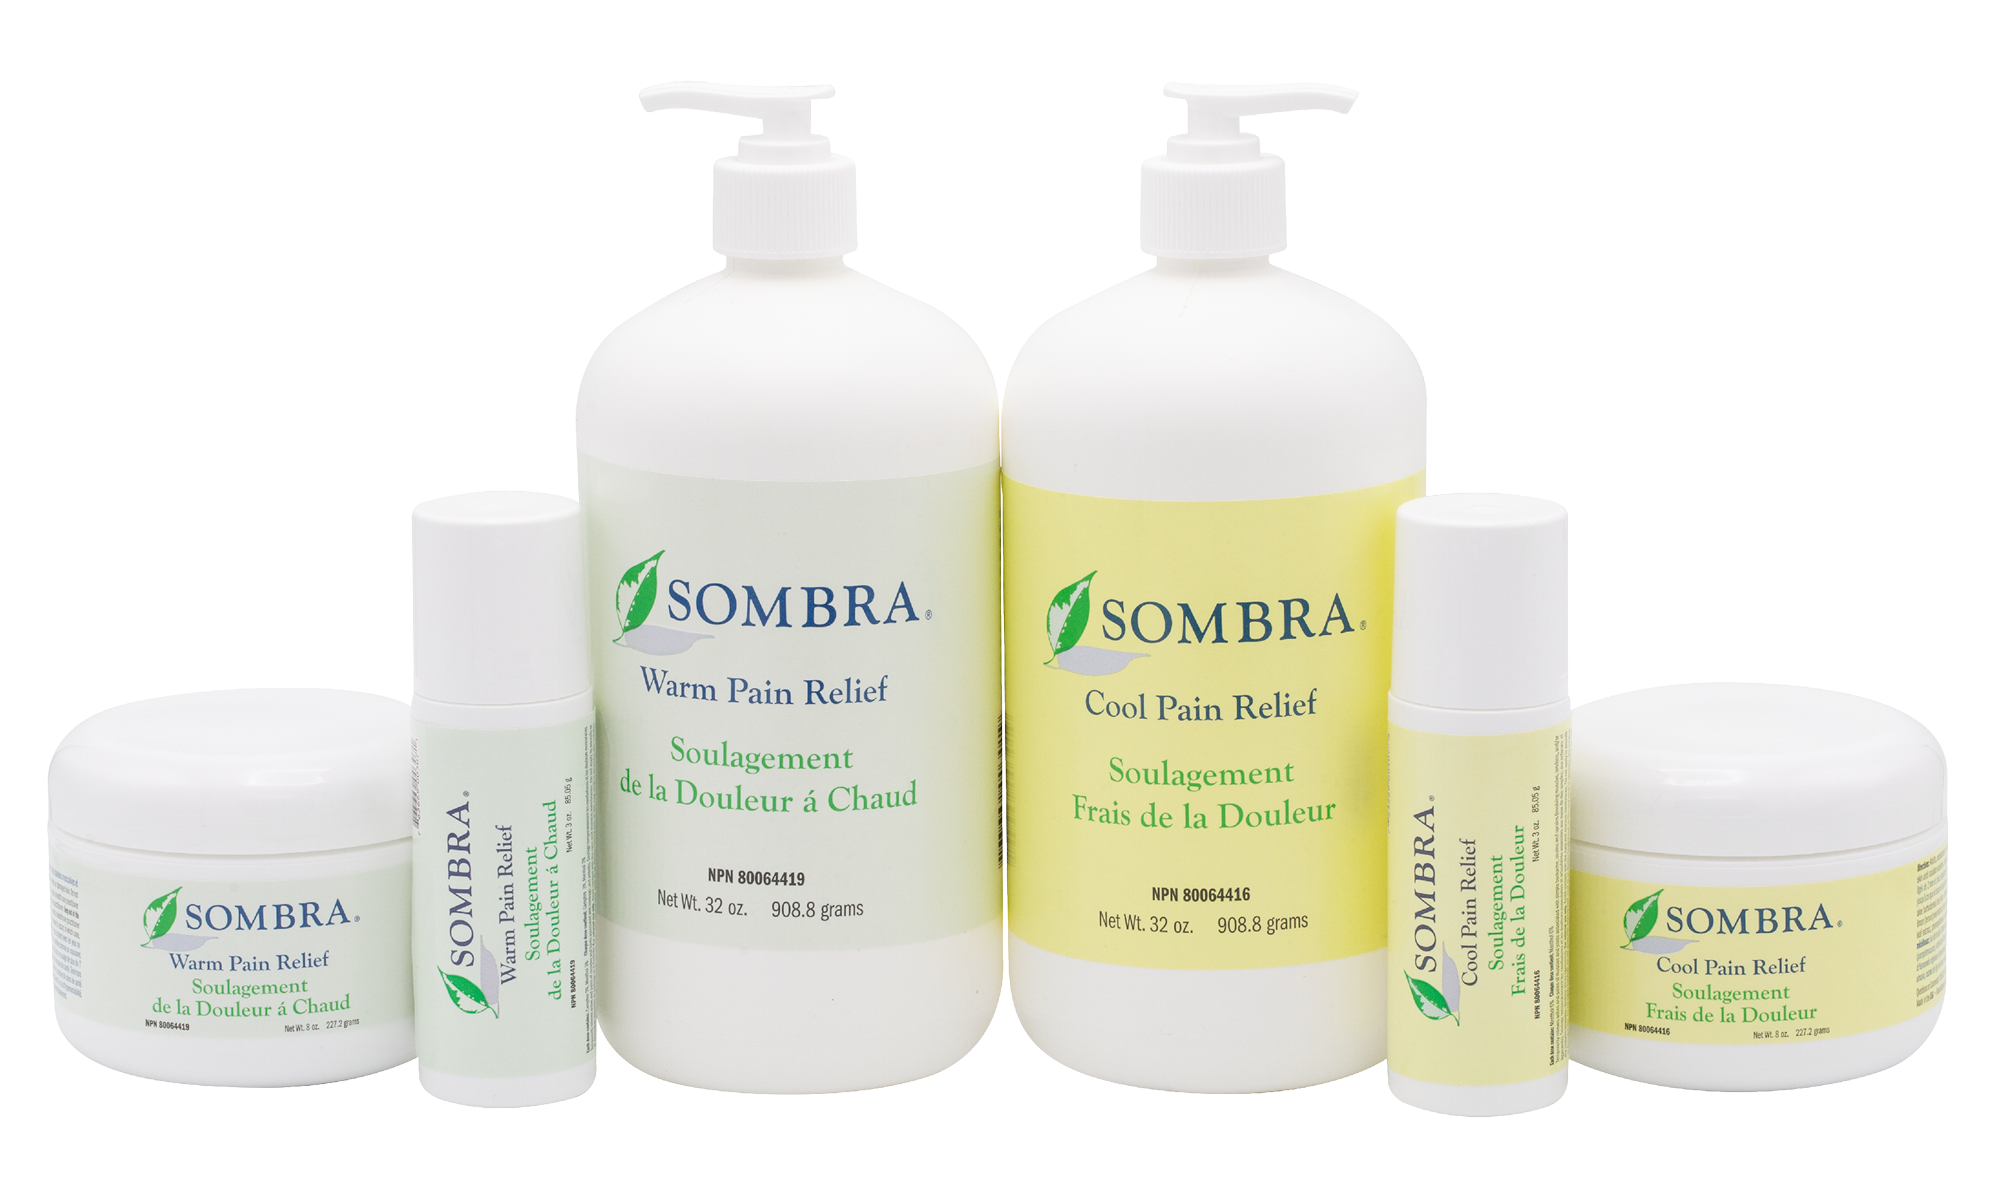 Sombra Warm Pain Relief – 32oz Pump